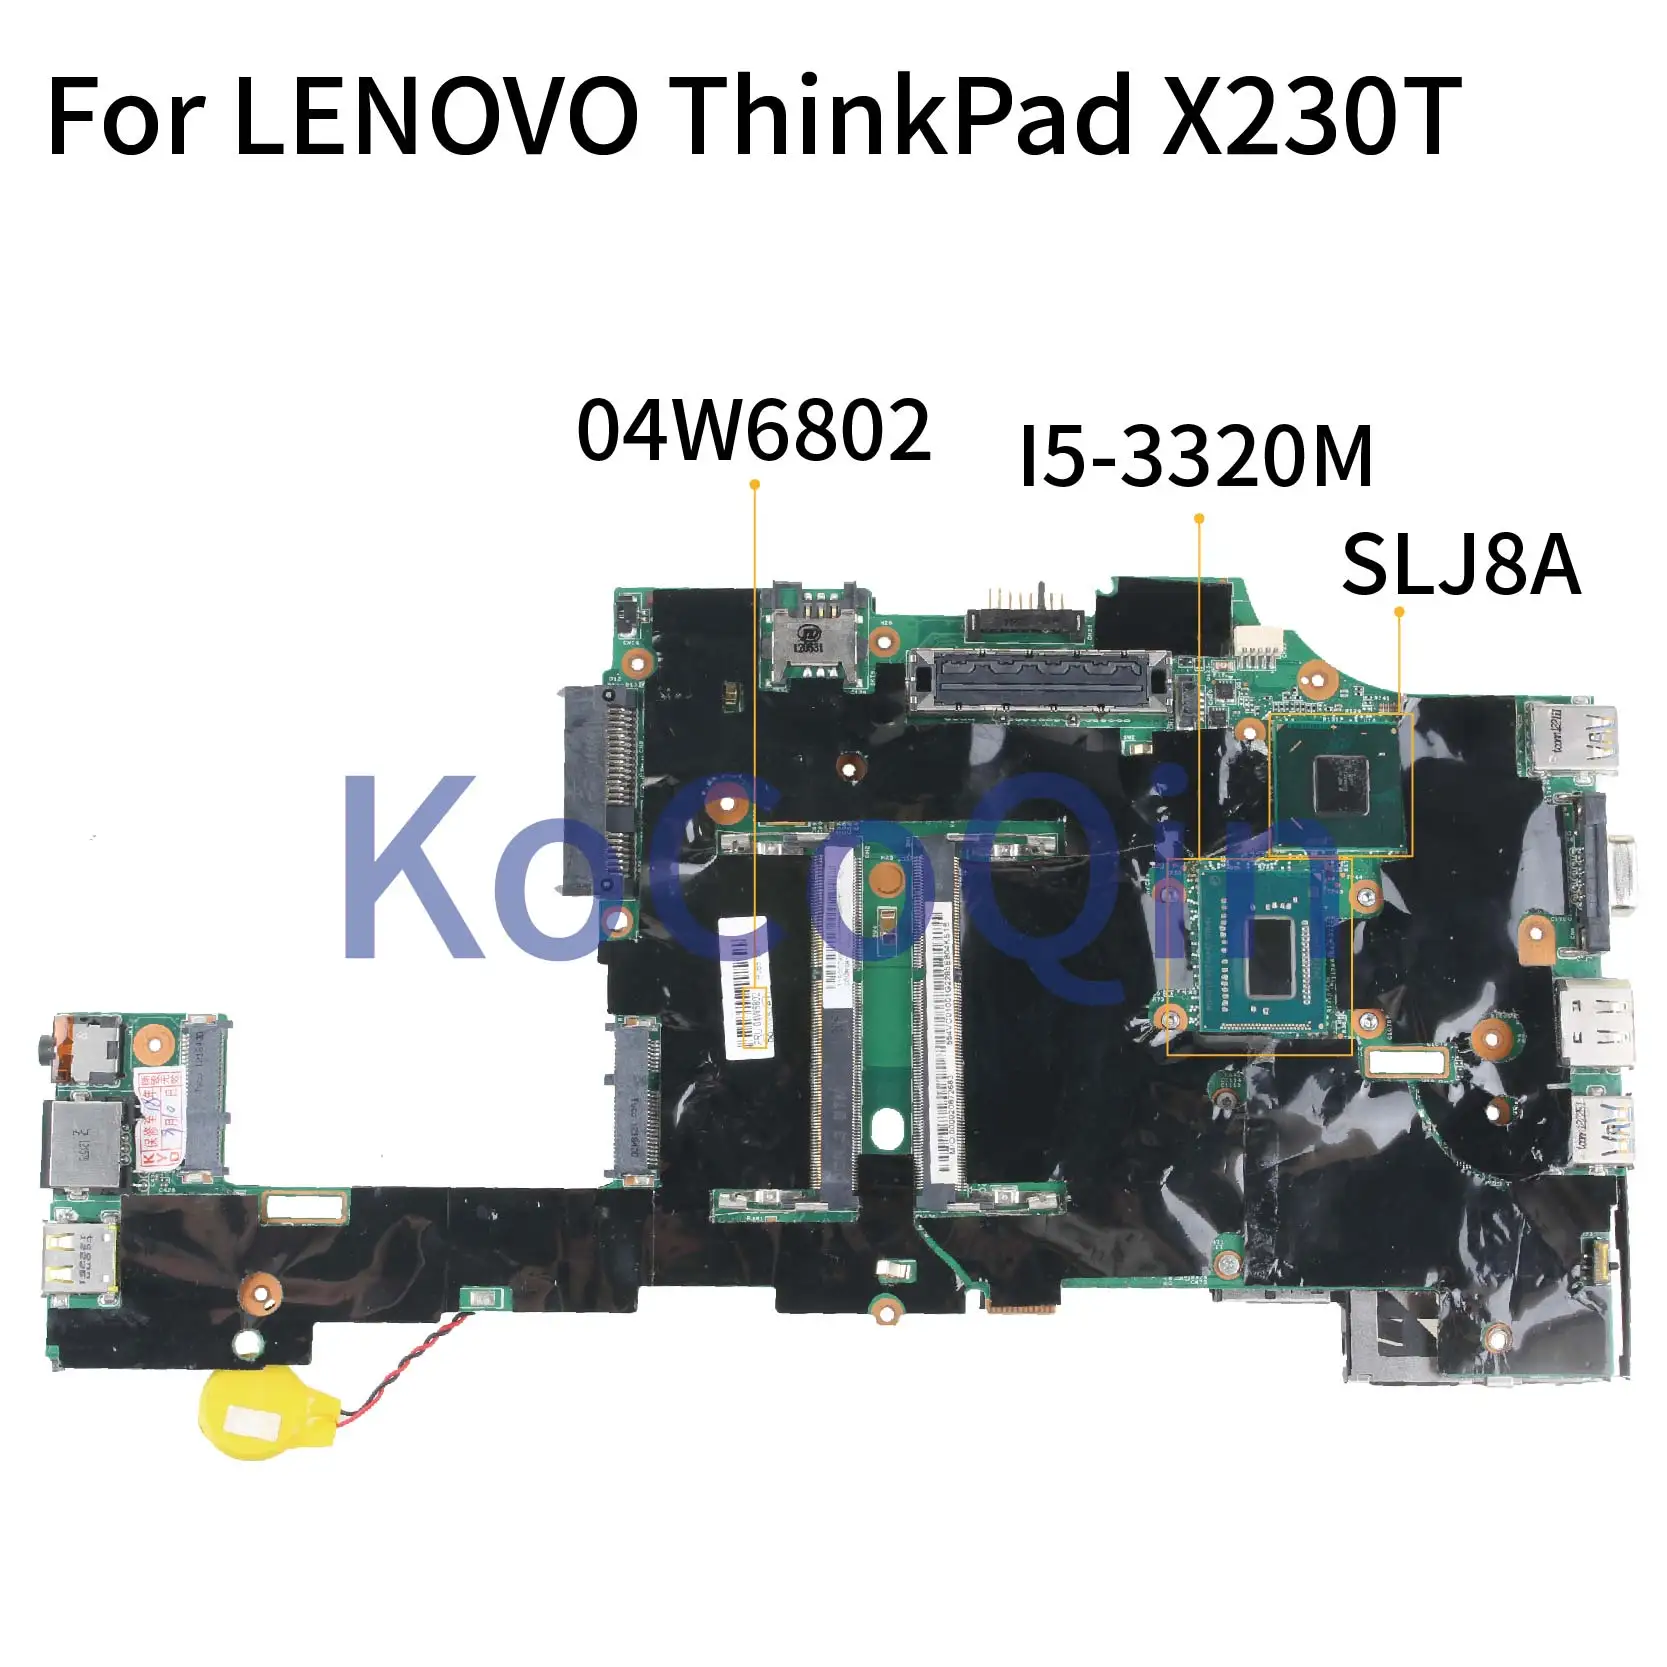 KoCoQin-Laptop-motherboard-For-LENOVO-ThinkPad-X230T-I5-3320M-Mainboard-11297-1-04W6802-04Y2036-04W6716-SR0MY.jpg